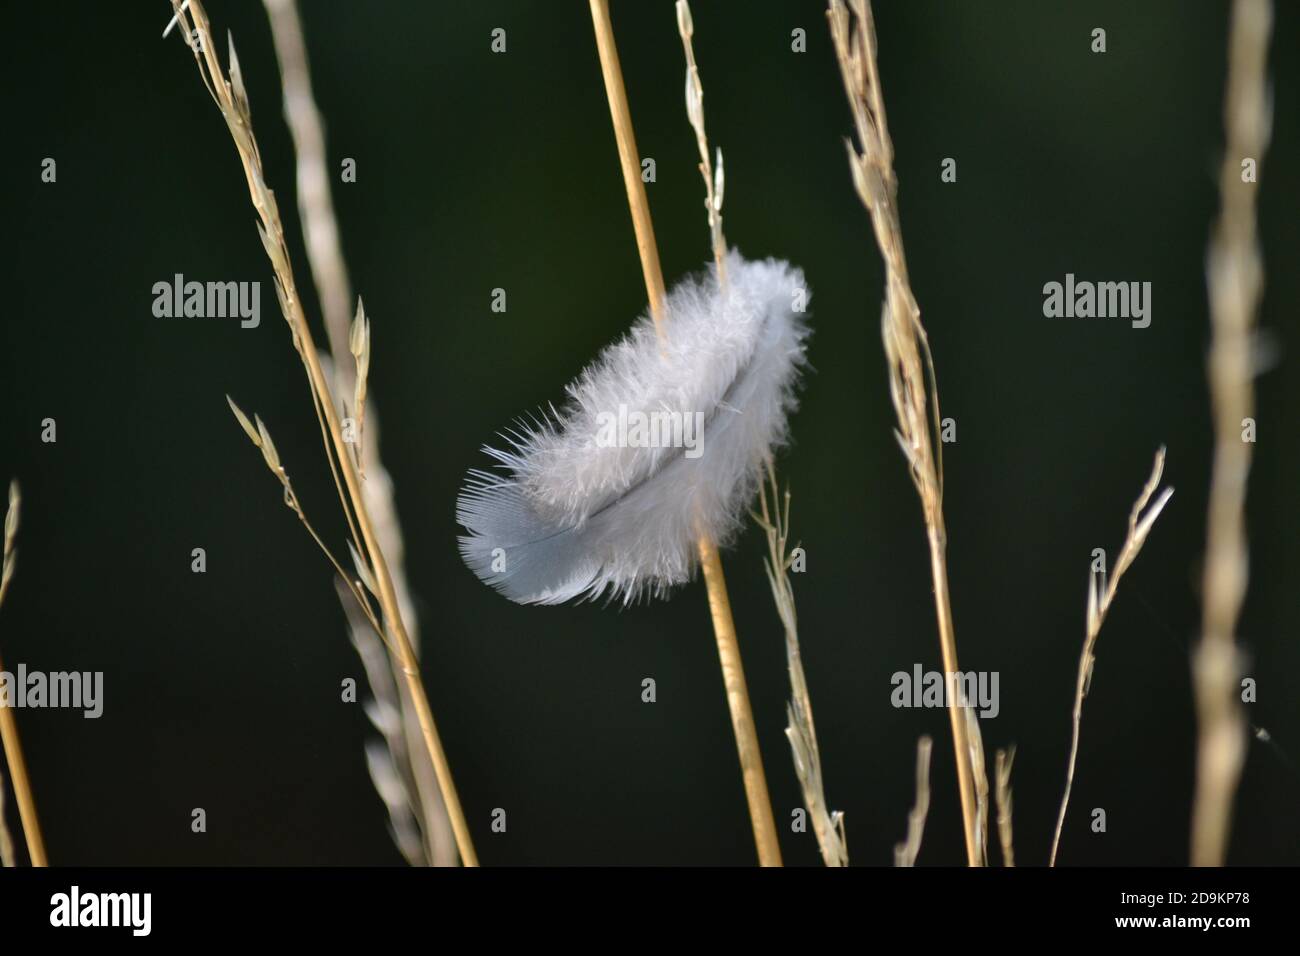 Piccola piuma appesa ad una lama d'erba Foto Stock